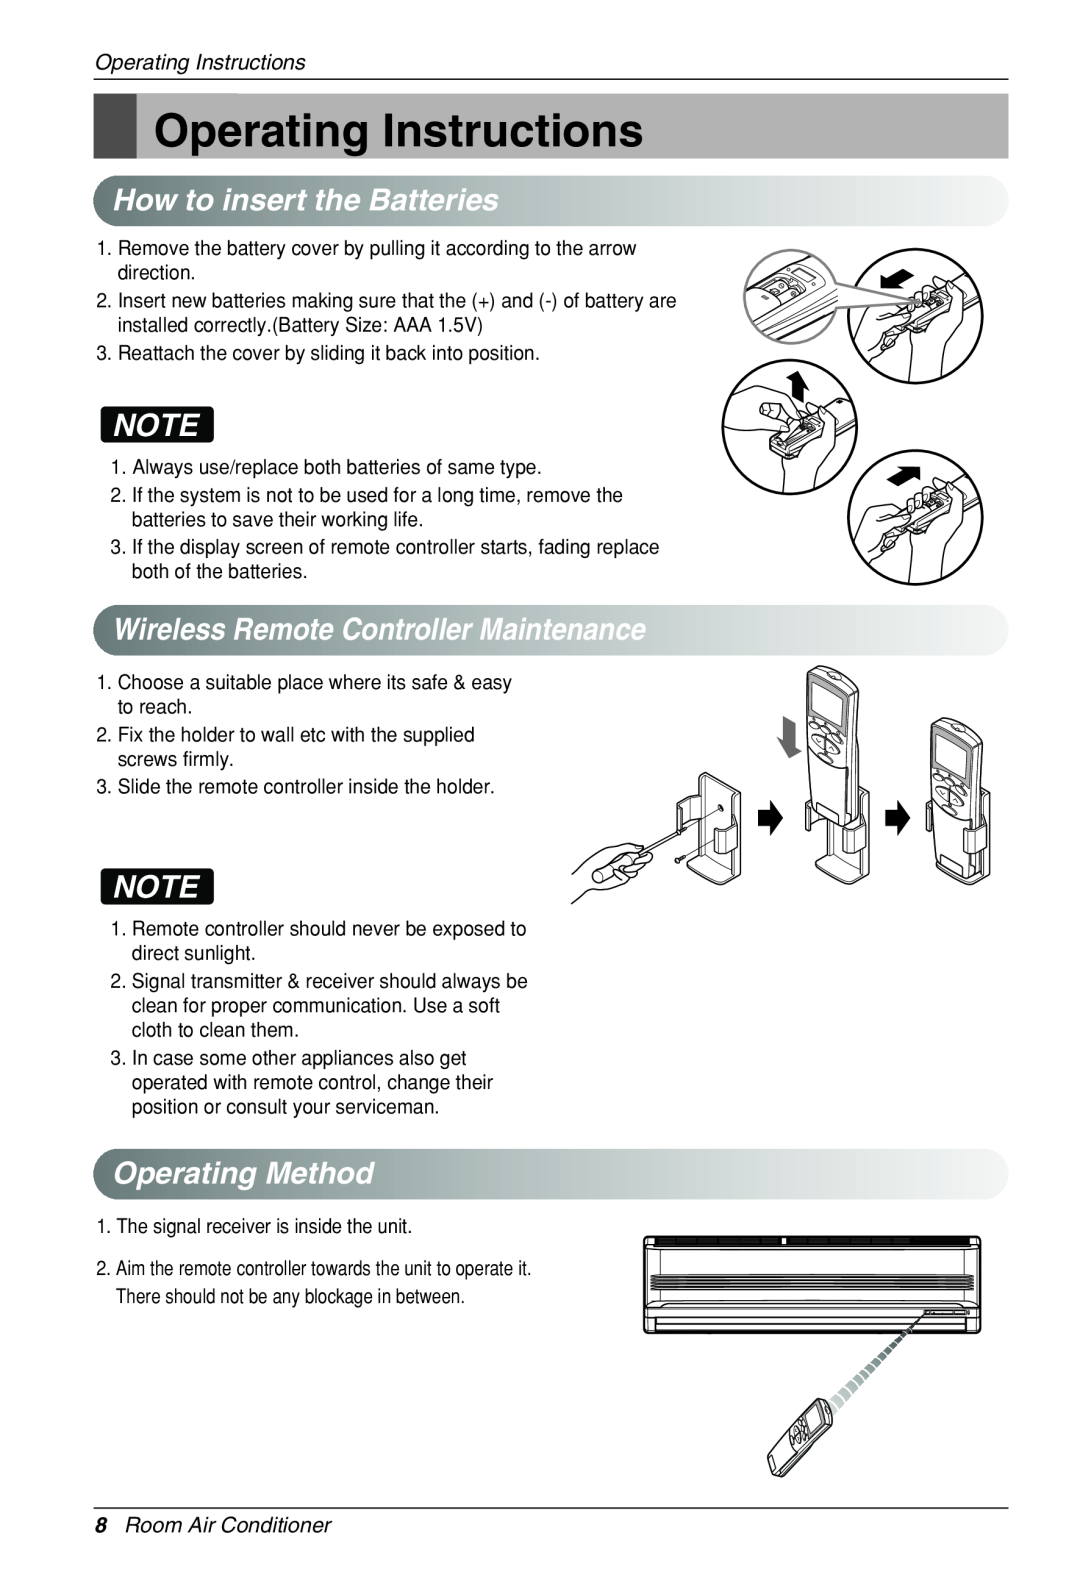 Heat Controller VMC30SB-1 manual Operating Instructions, HowtoinserttheBatteries, WirelessRemoteControllerMaintenance 